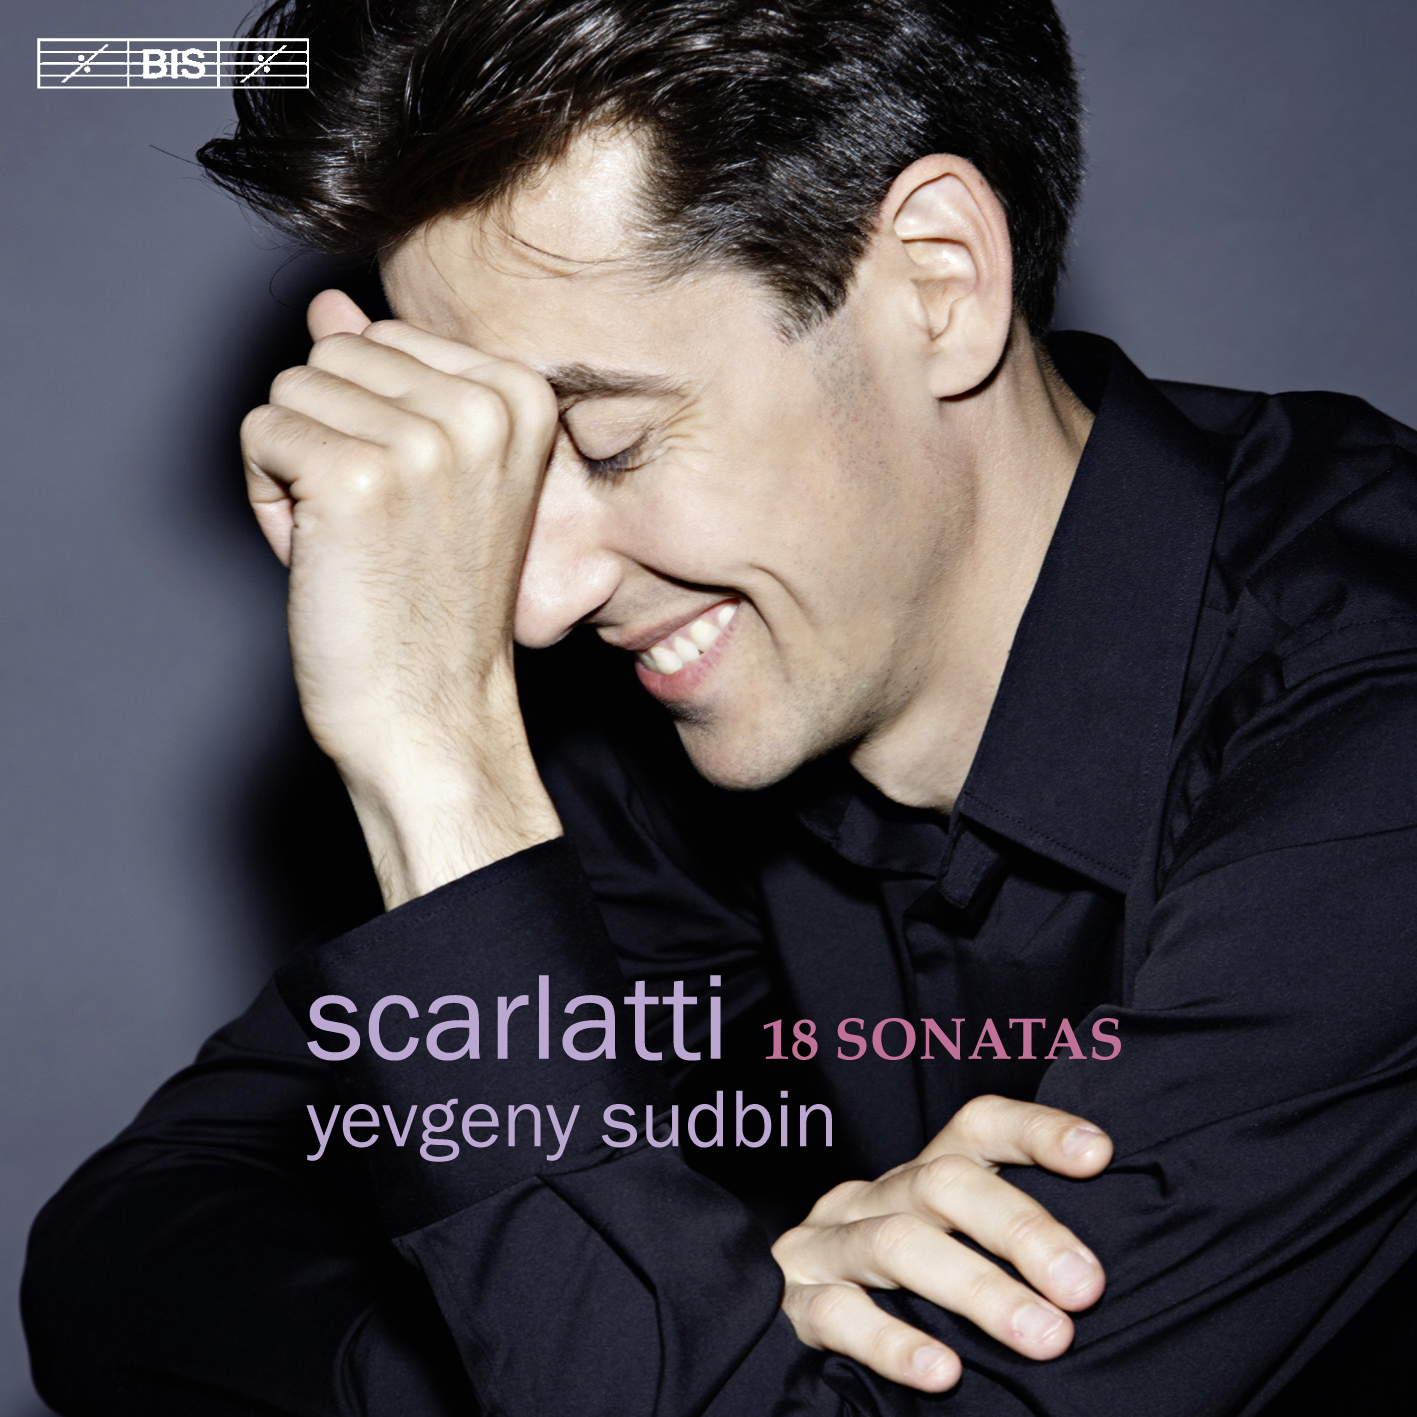 Scarlatti - Yevgeny Sudbin